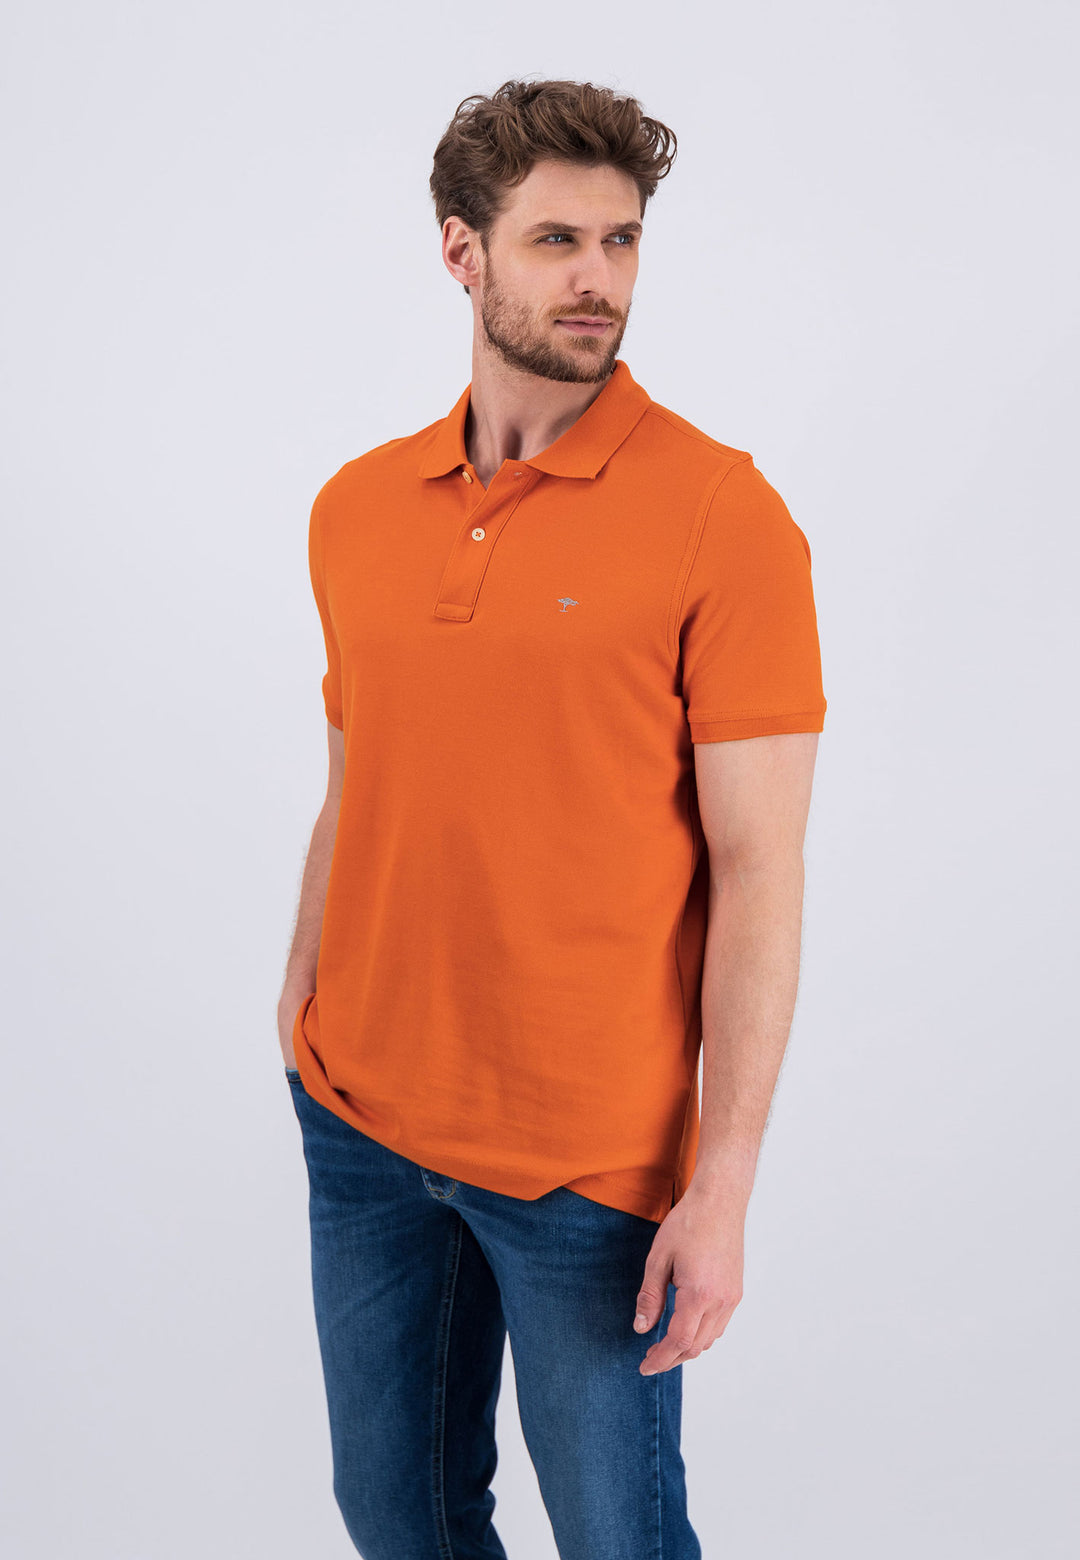 Men\'s polo shirts HATTON Shop & Offizieller shop | FYNCH- T-shirts Online official Fynch-Hatton – online 